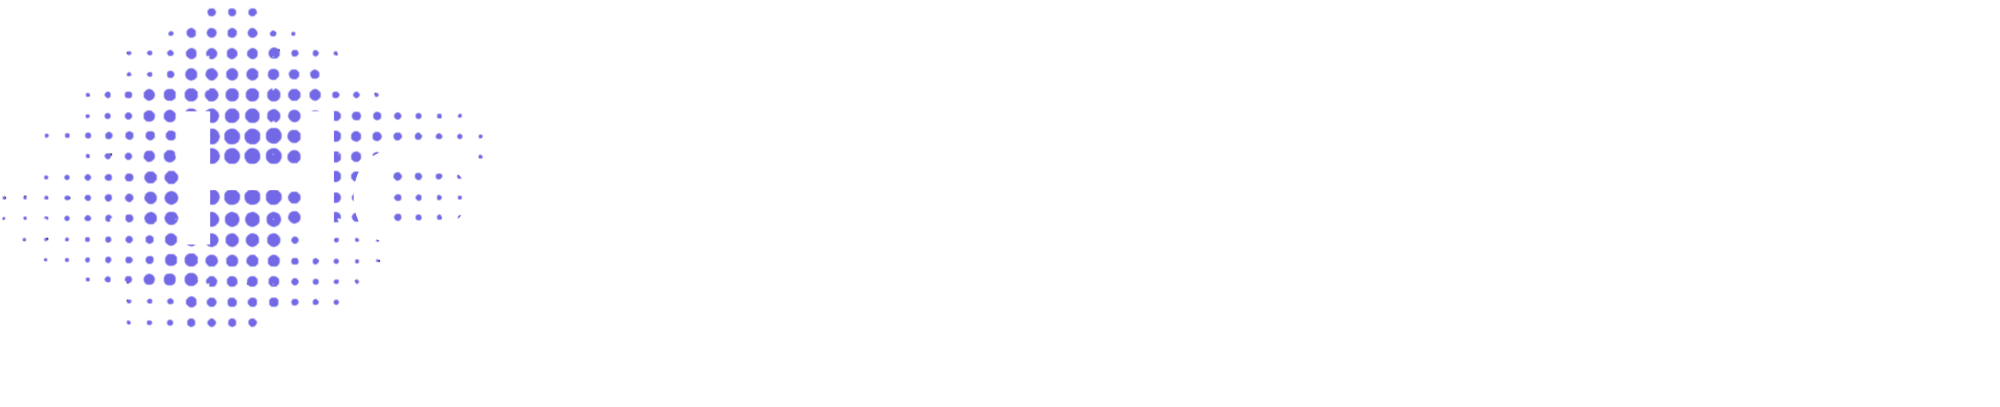 HomebuilderAI logo white text transparent bkgrd